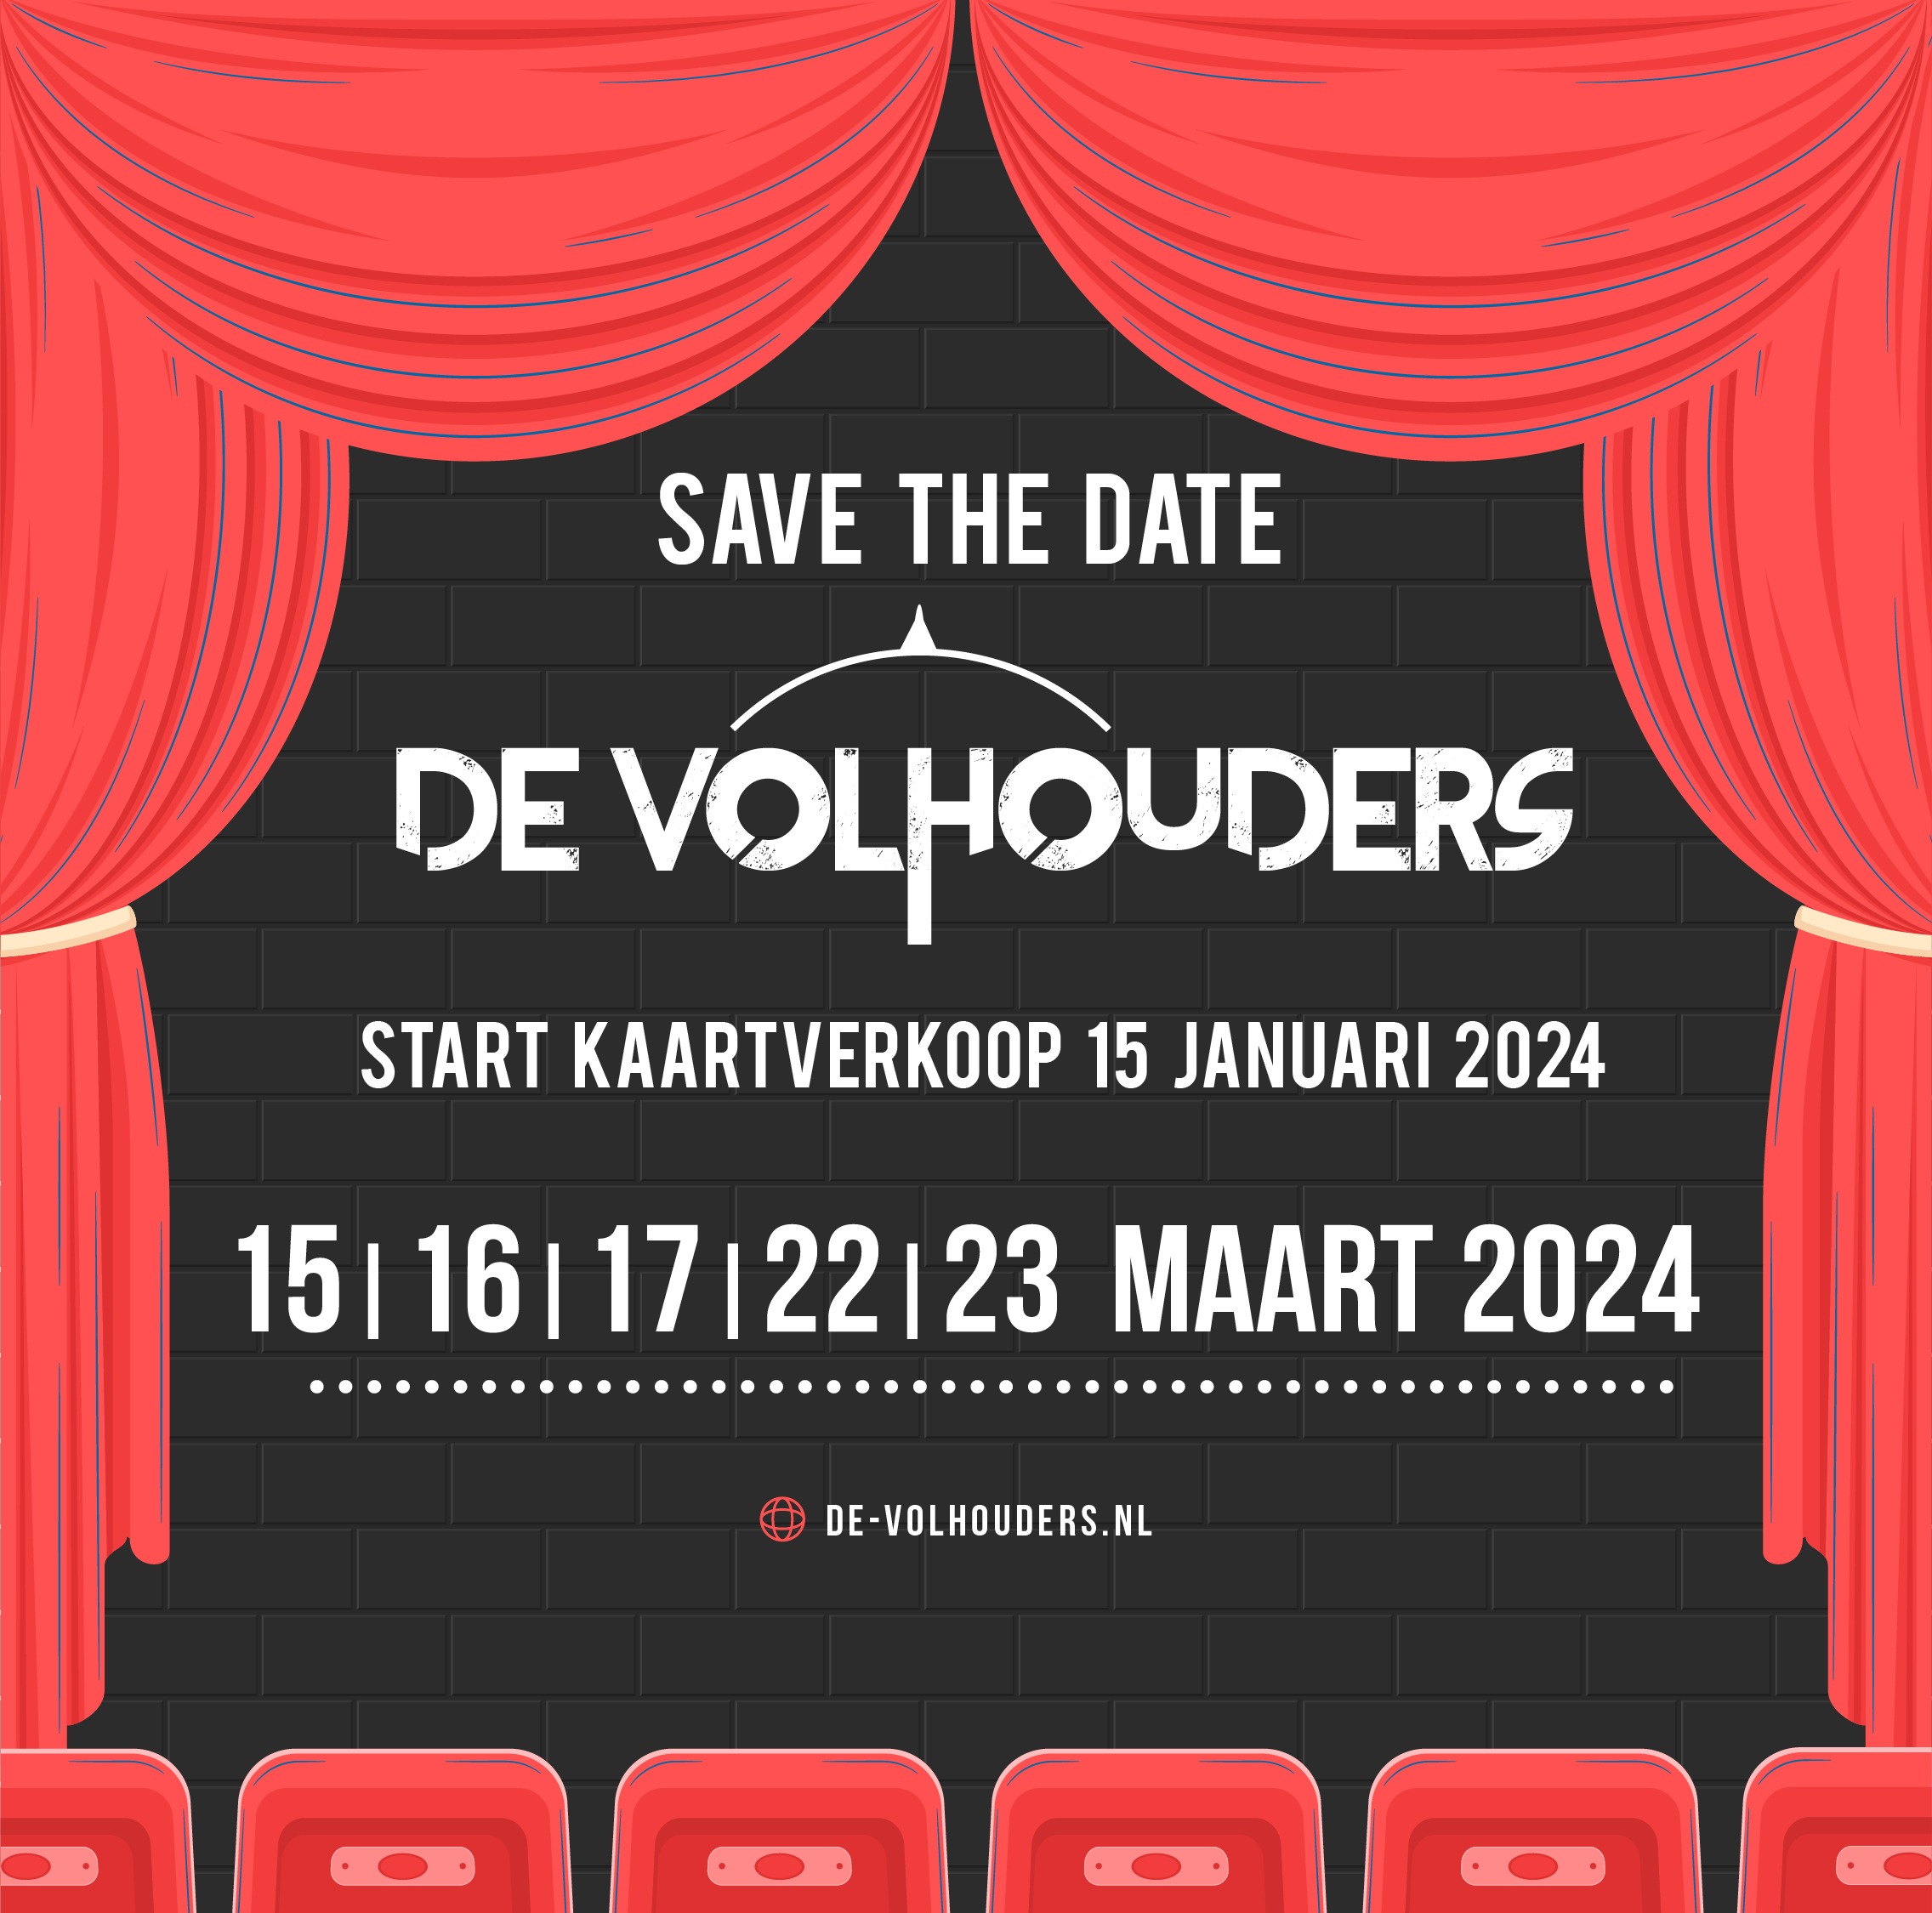 Save the date De Volhouders 2024